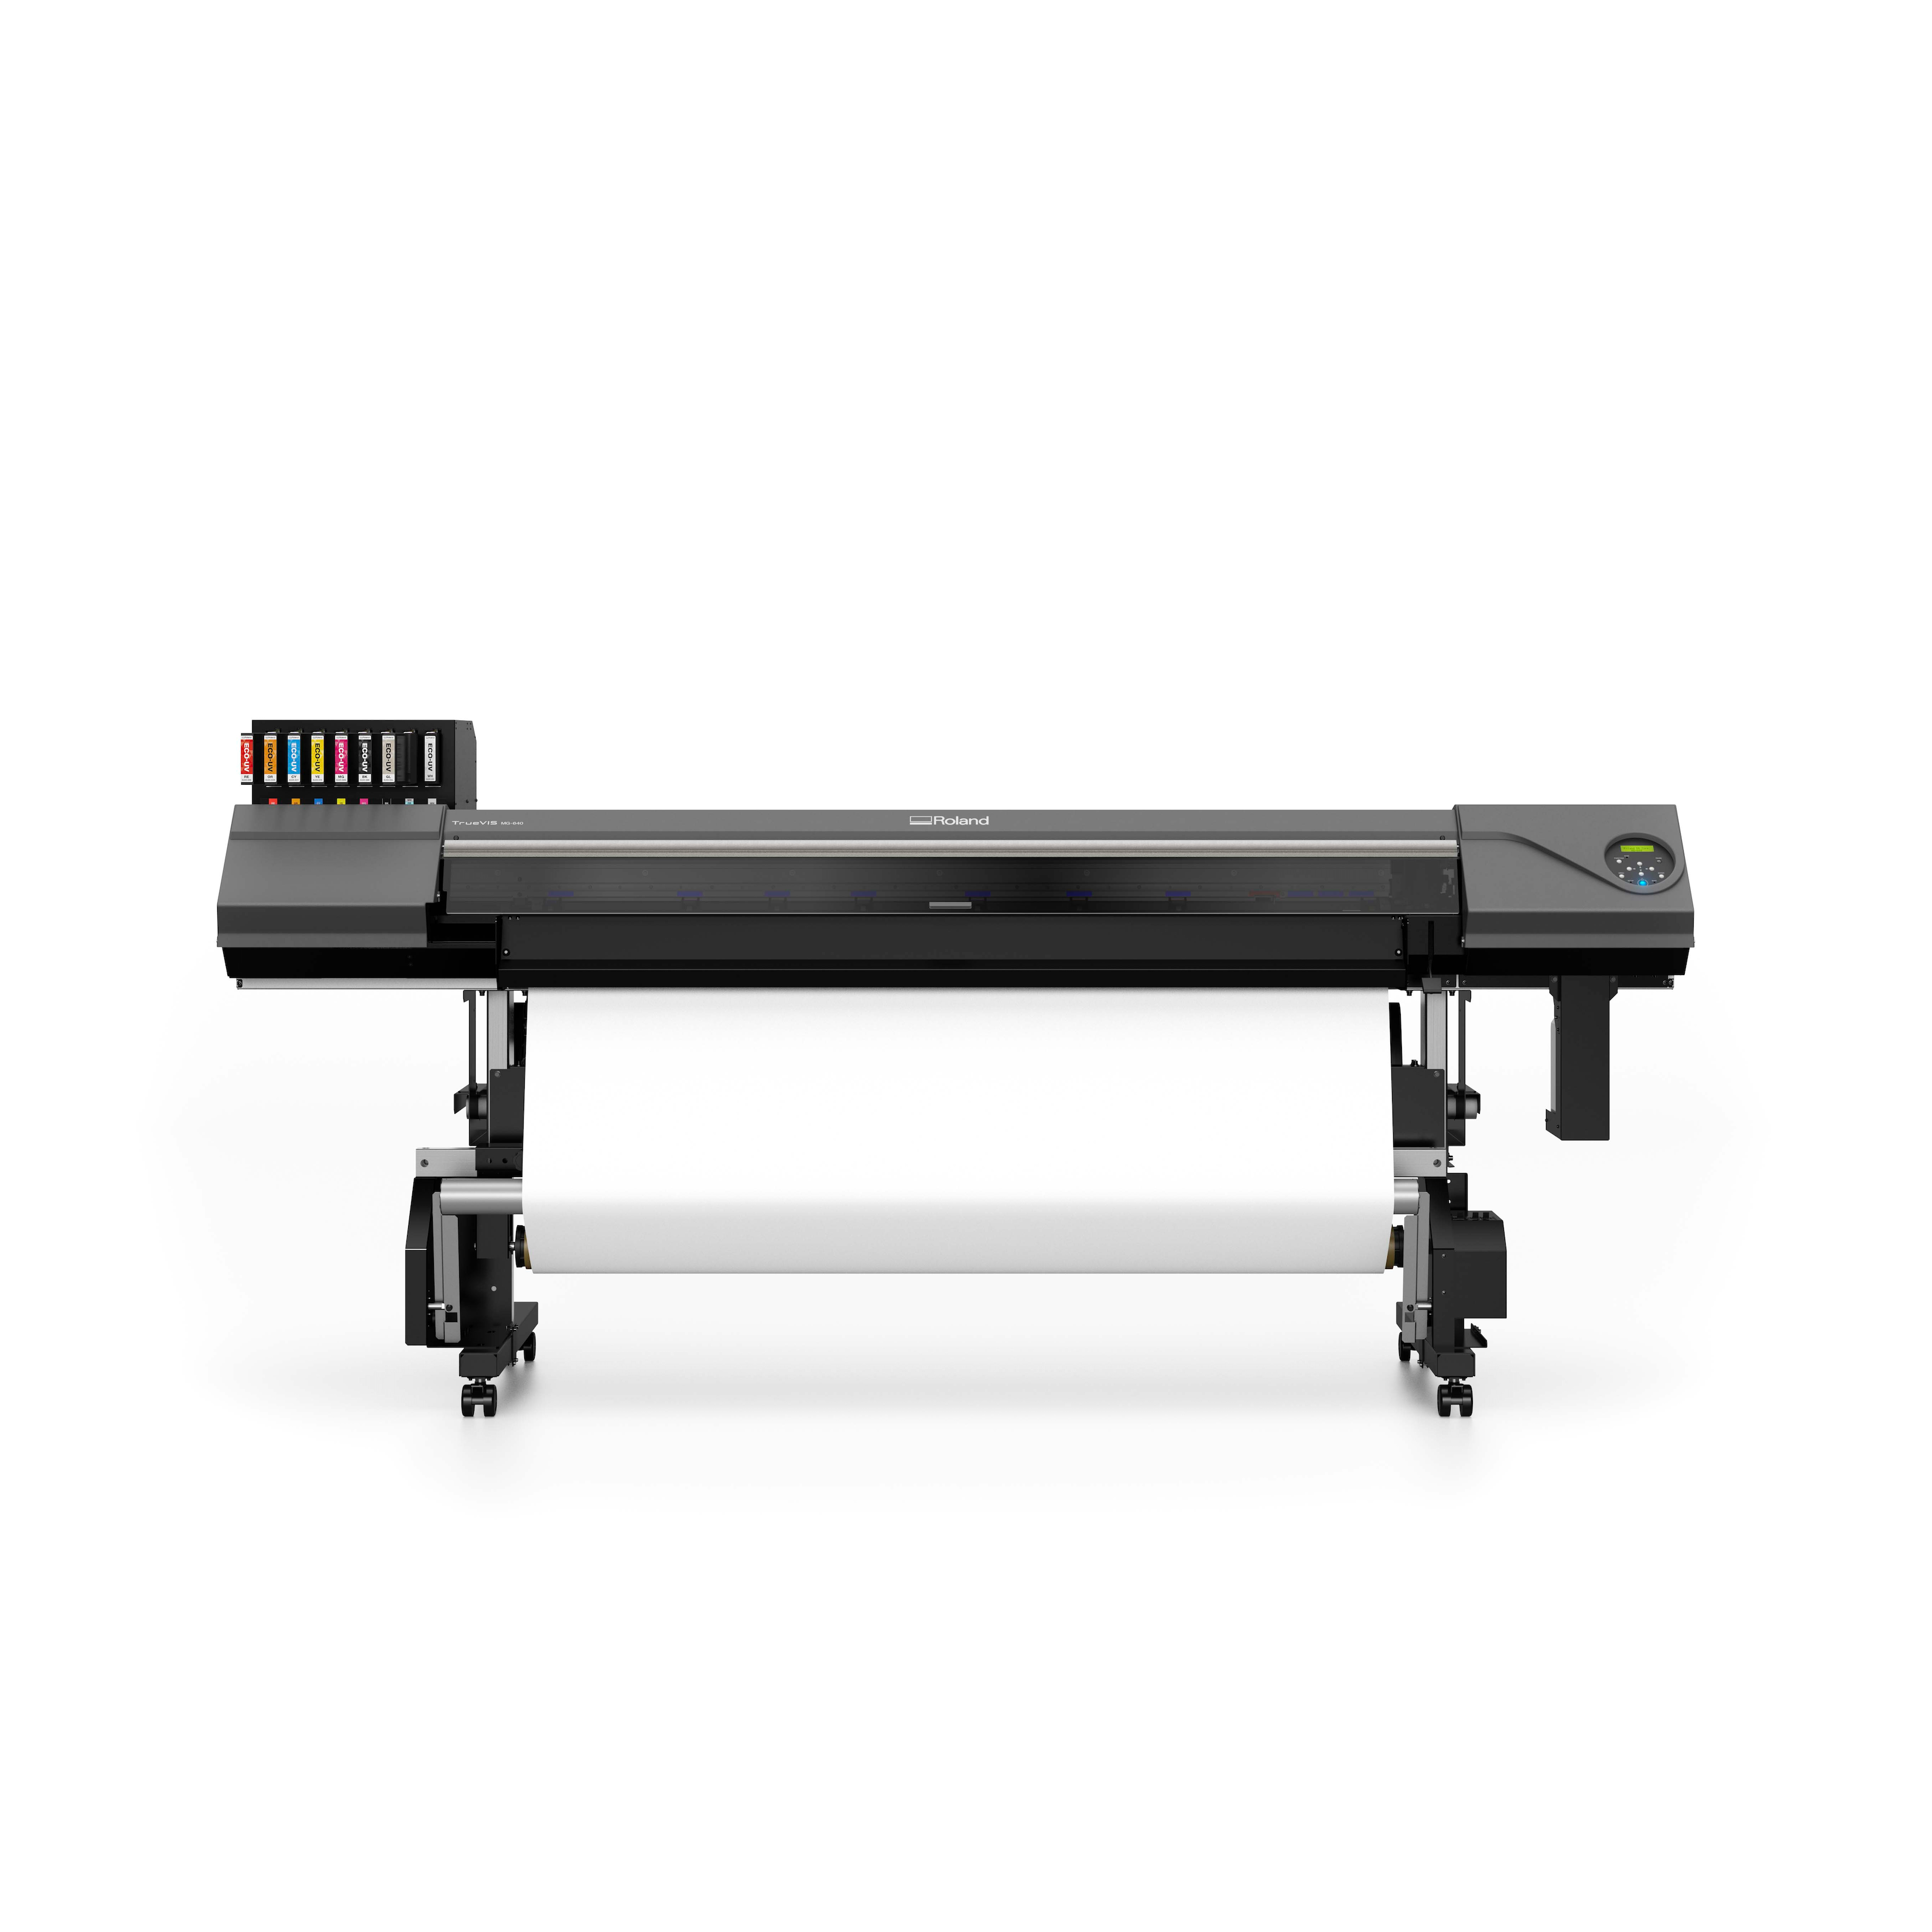 Roland TrueVIS MG-640 UV Printer/Cutter